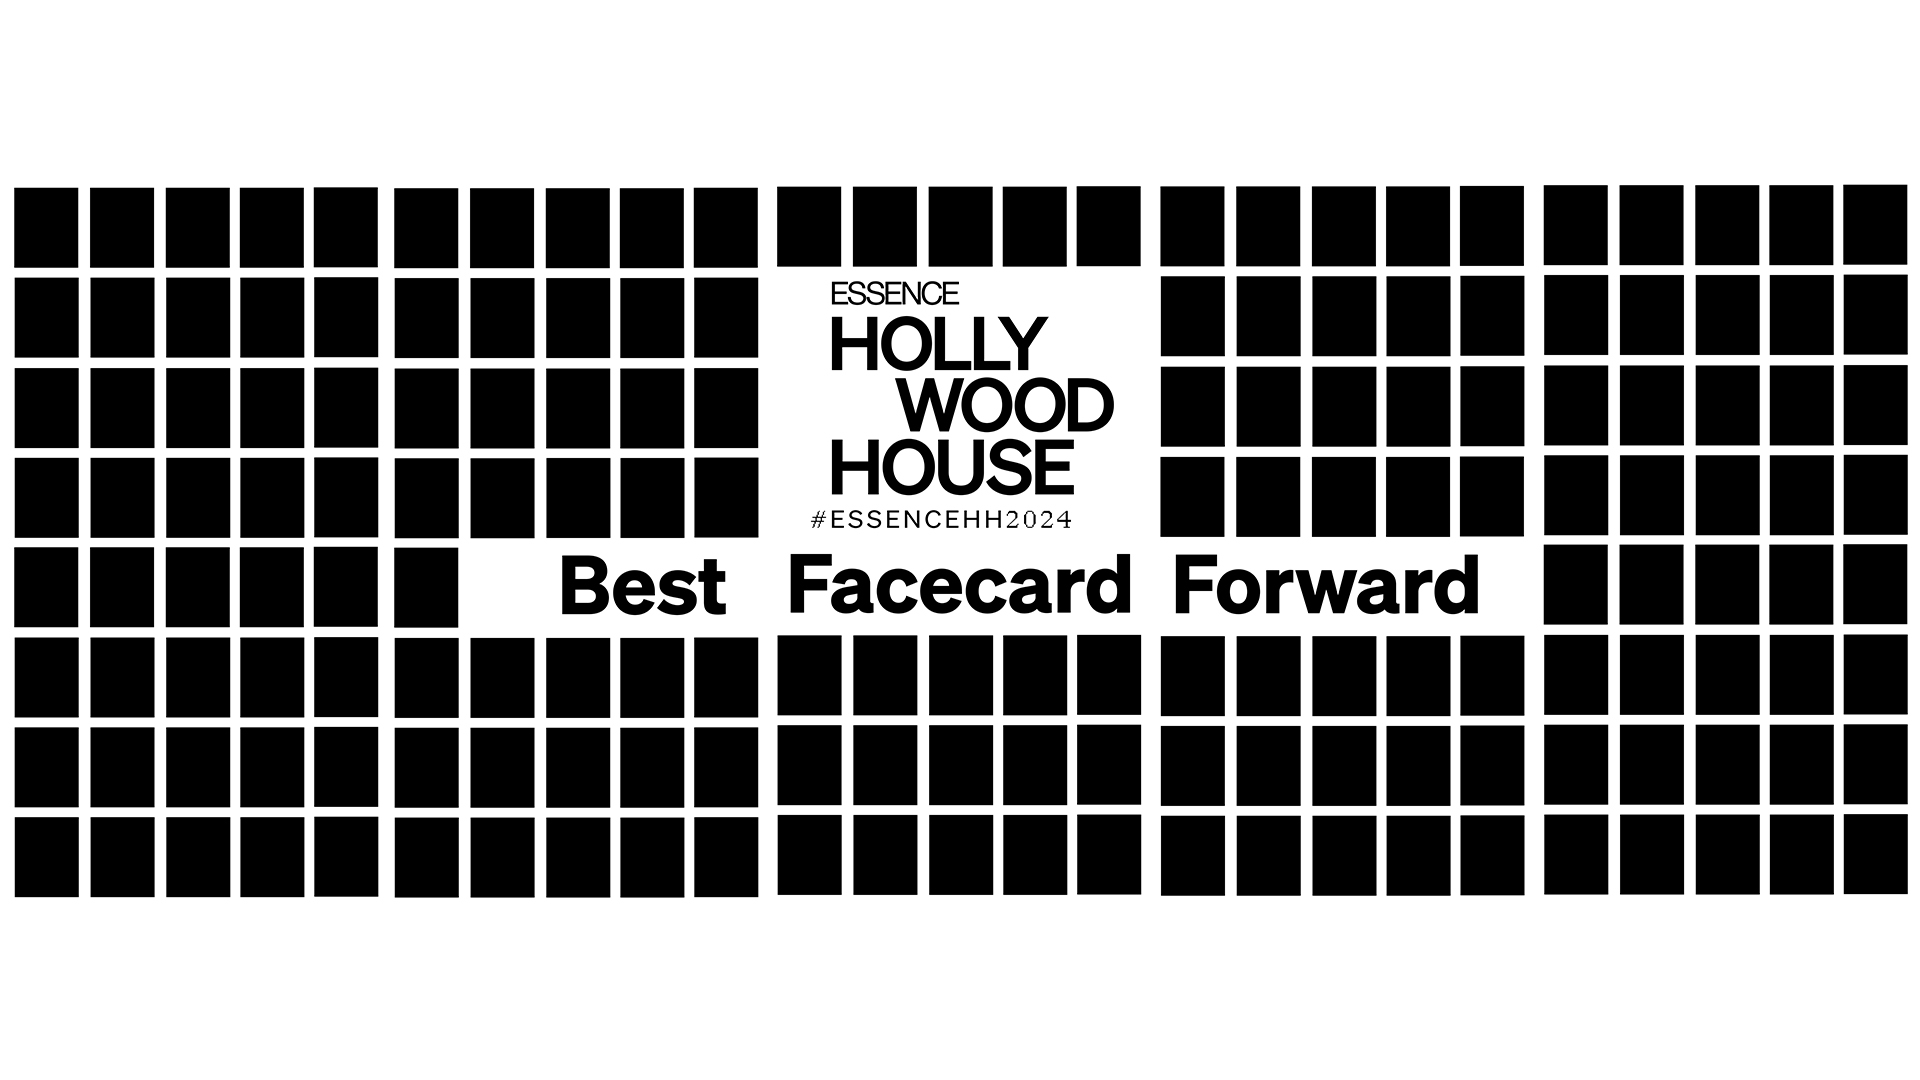 Best Facecard Forward